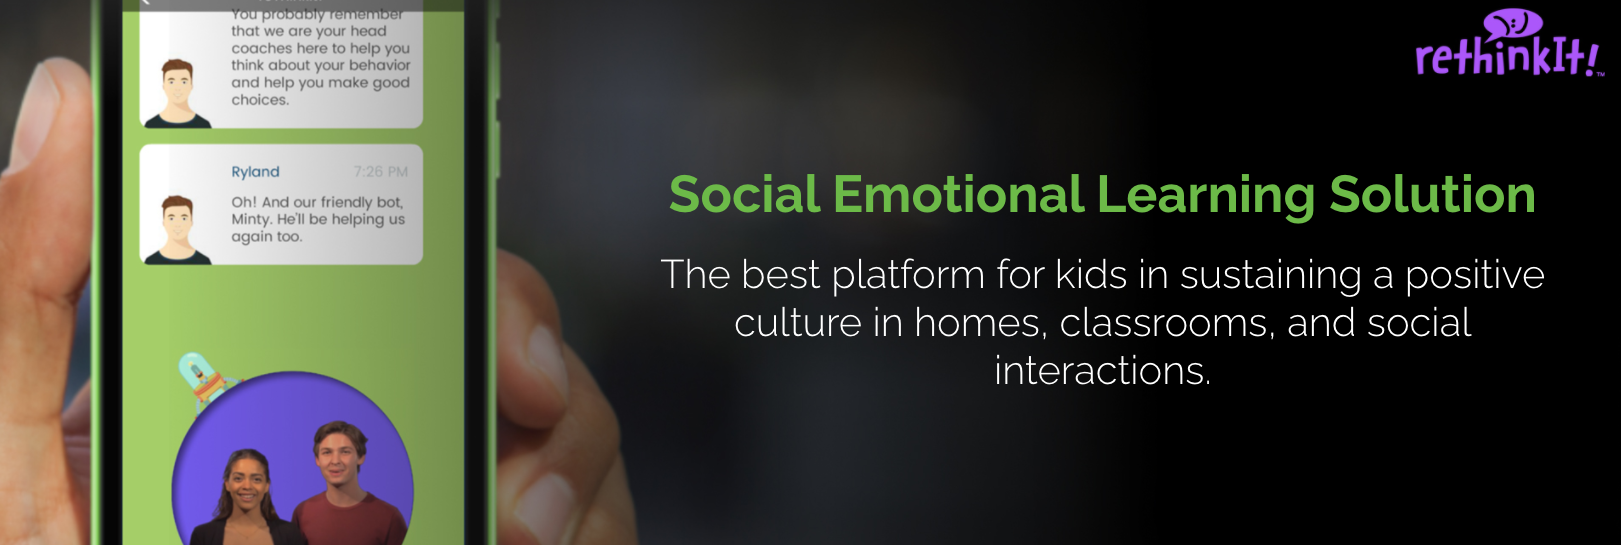 social emotional learning